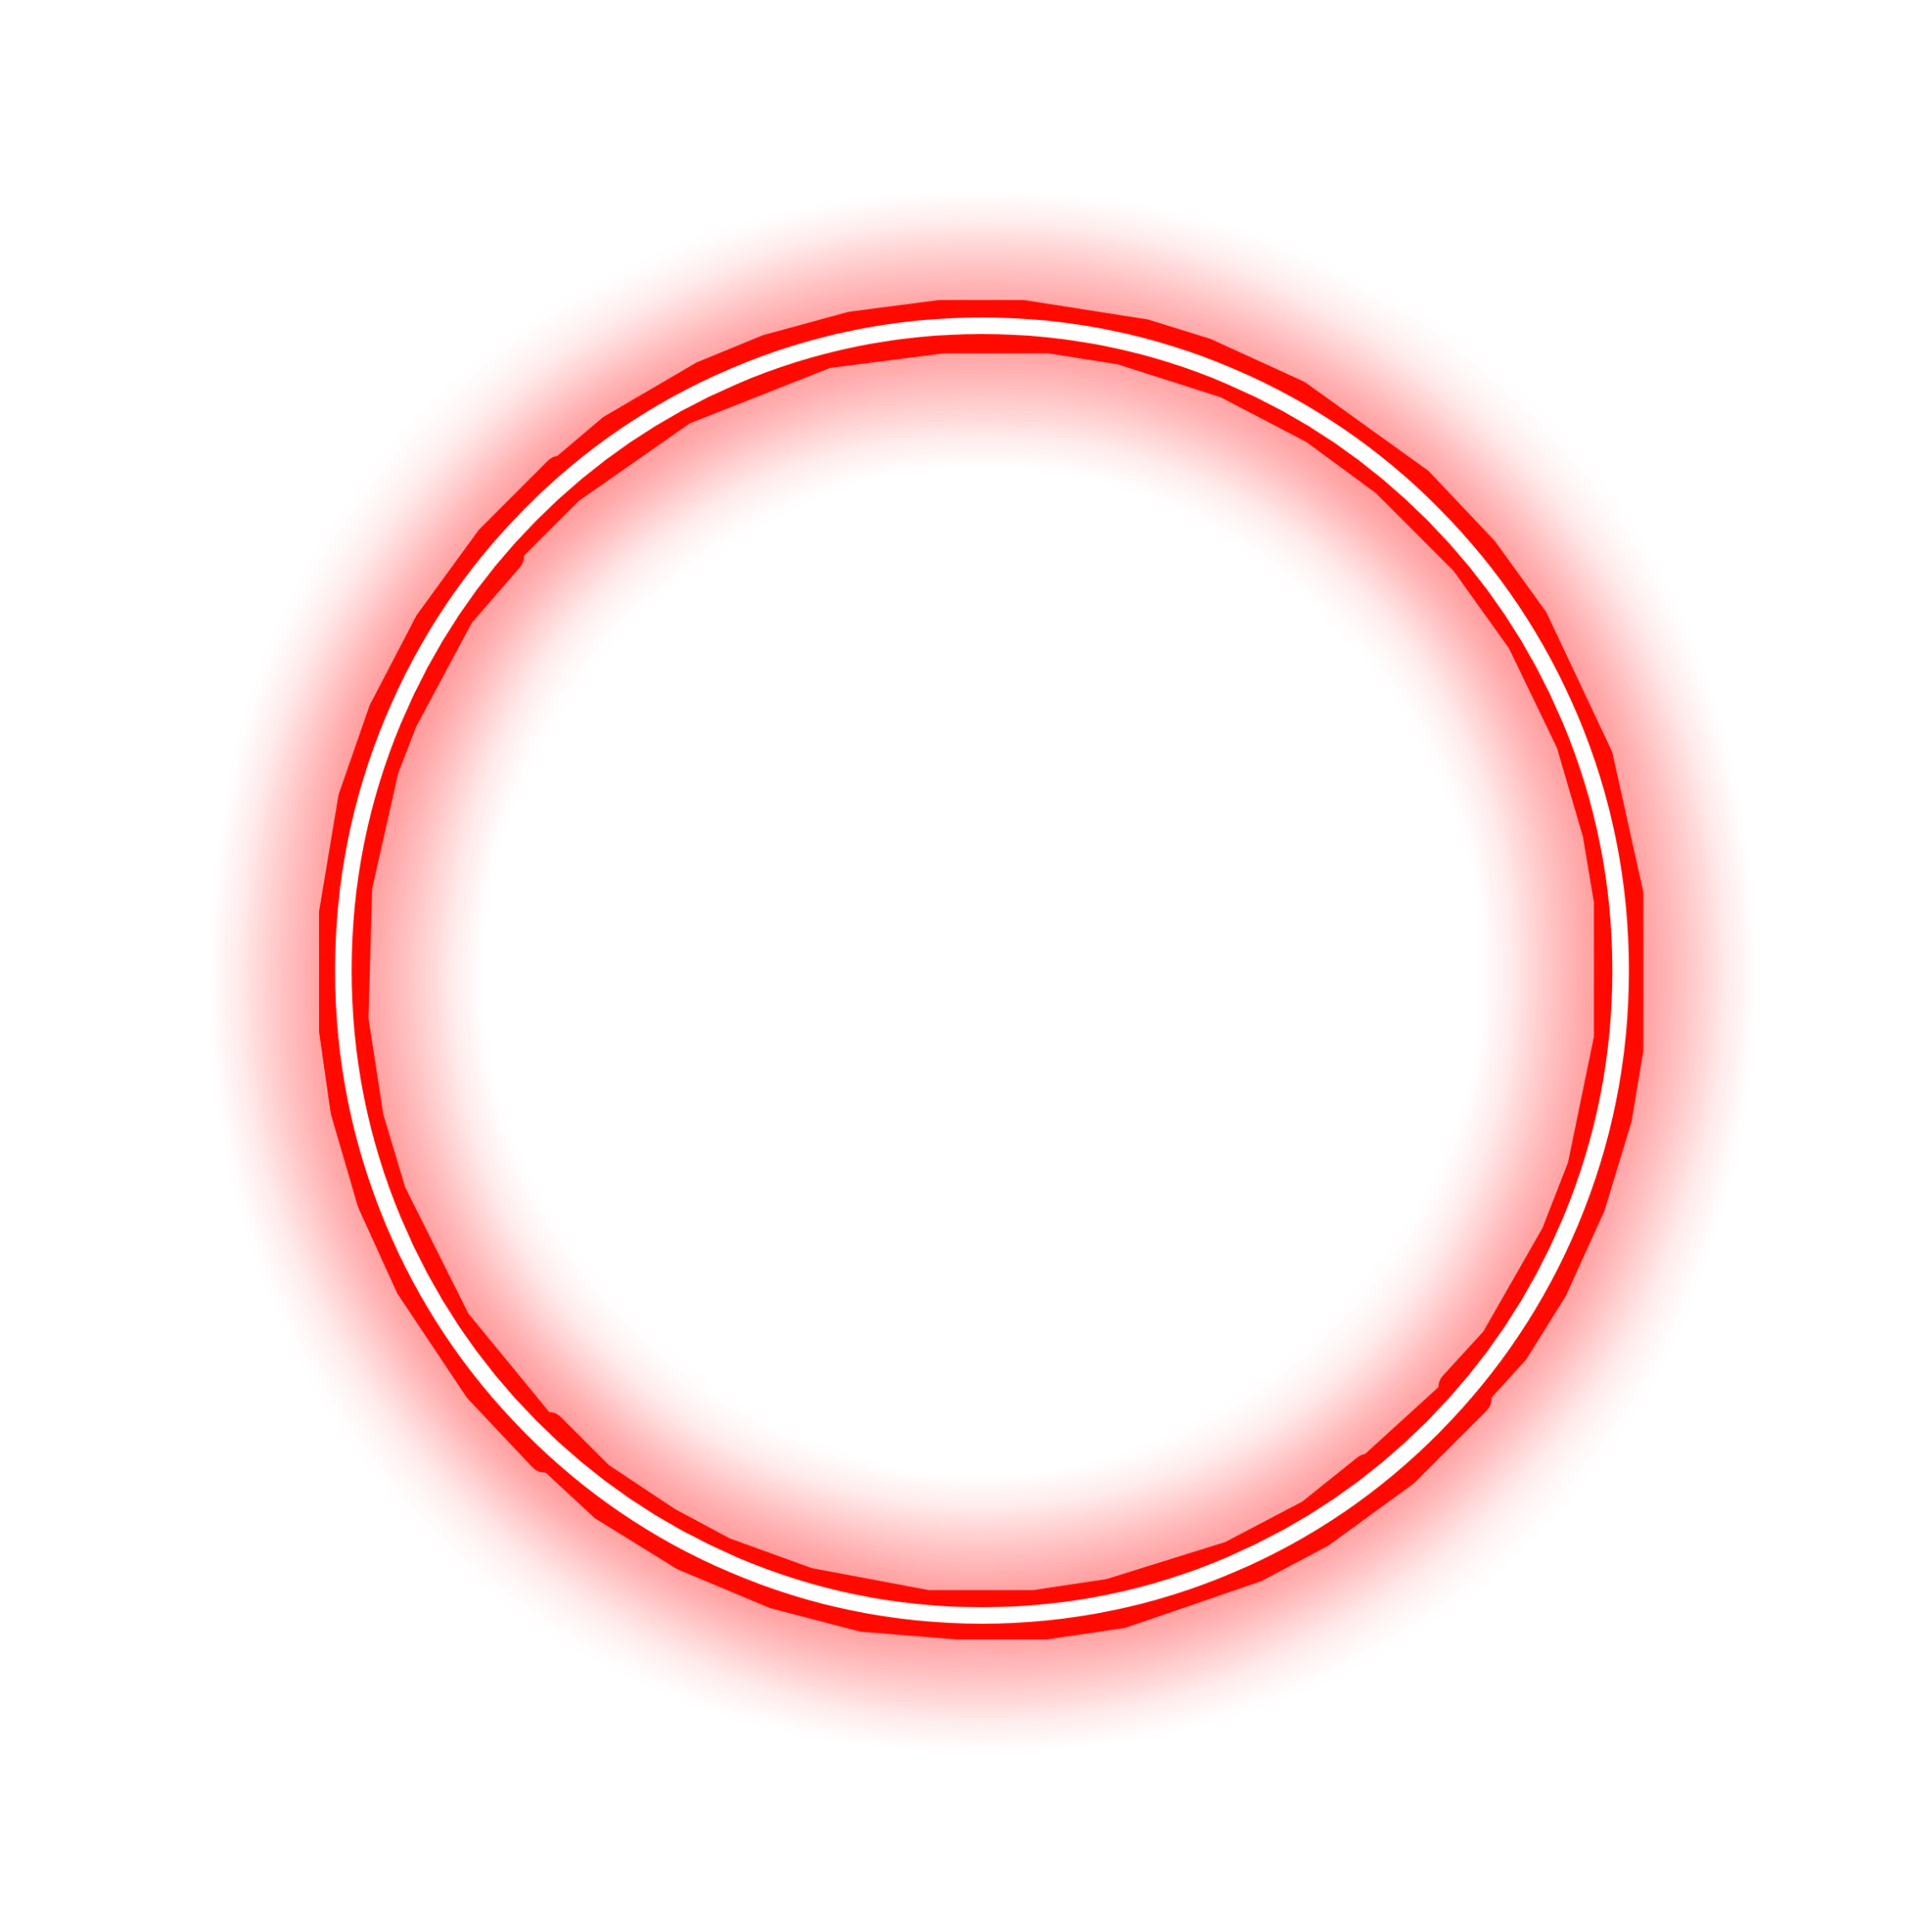 Круг без цензуры. Неоновый круг на прозрачном фоне. Красный неоновый круг. Круглая рамка неон. Круг без фона.